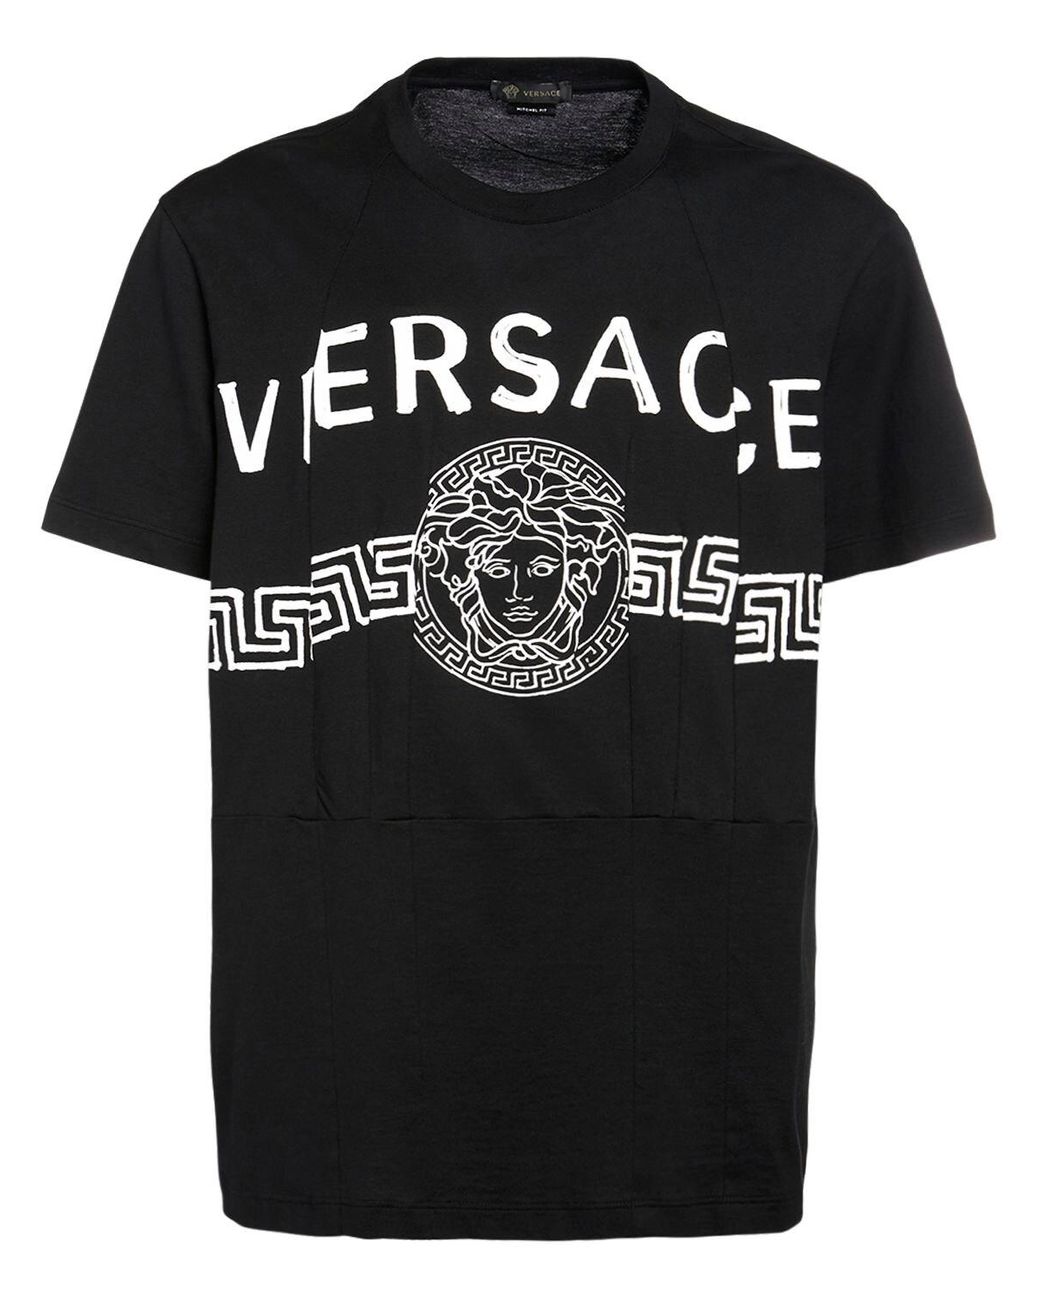 Versace Logo Print Cotton T-shirt in Black for Men - Lyst